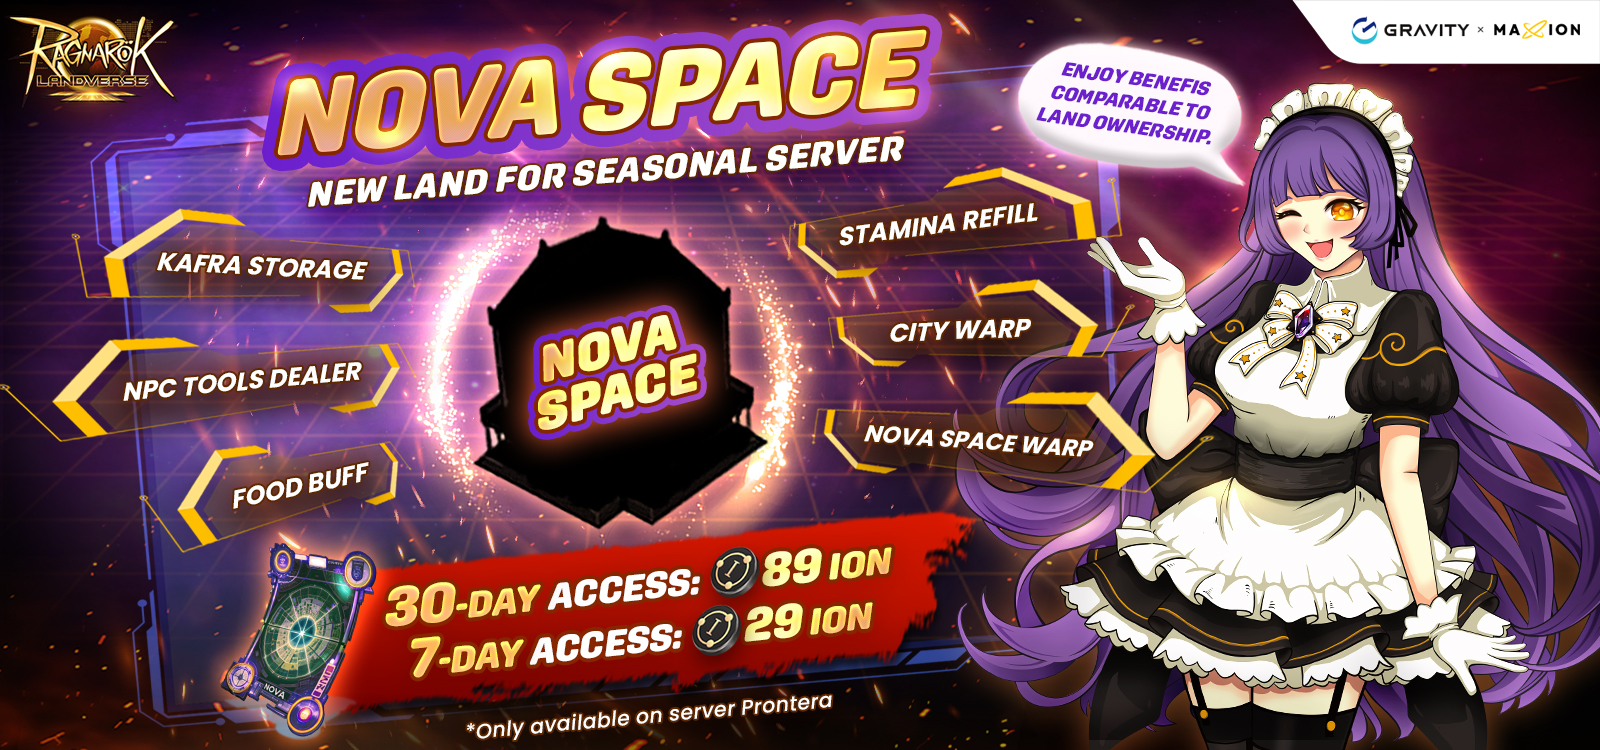 Ragnarok Landverse NOVA SPACE: A New Land for the Seasonal Server